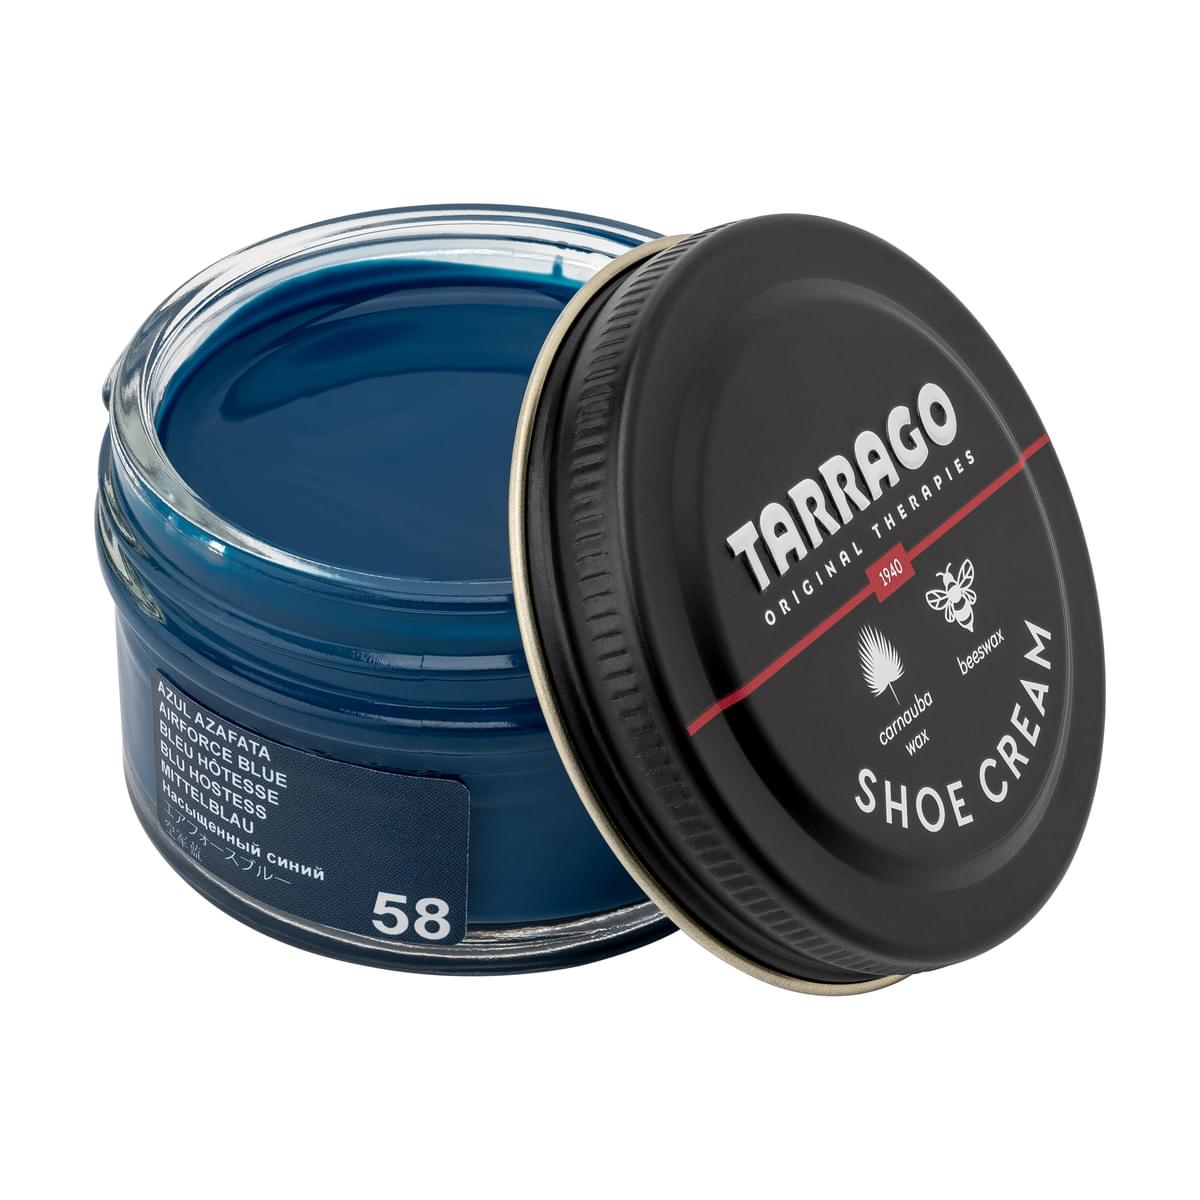 Tarrago Shoe Cream  - Airforce Blue - 58